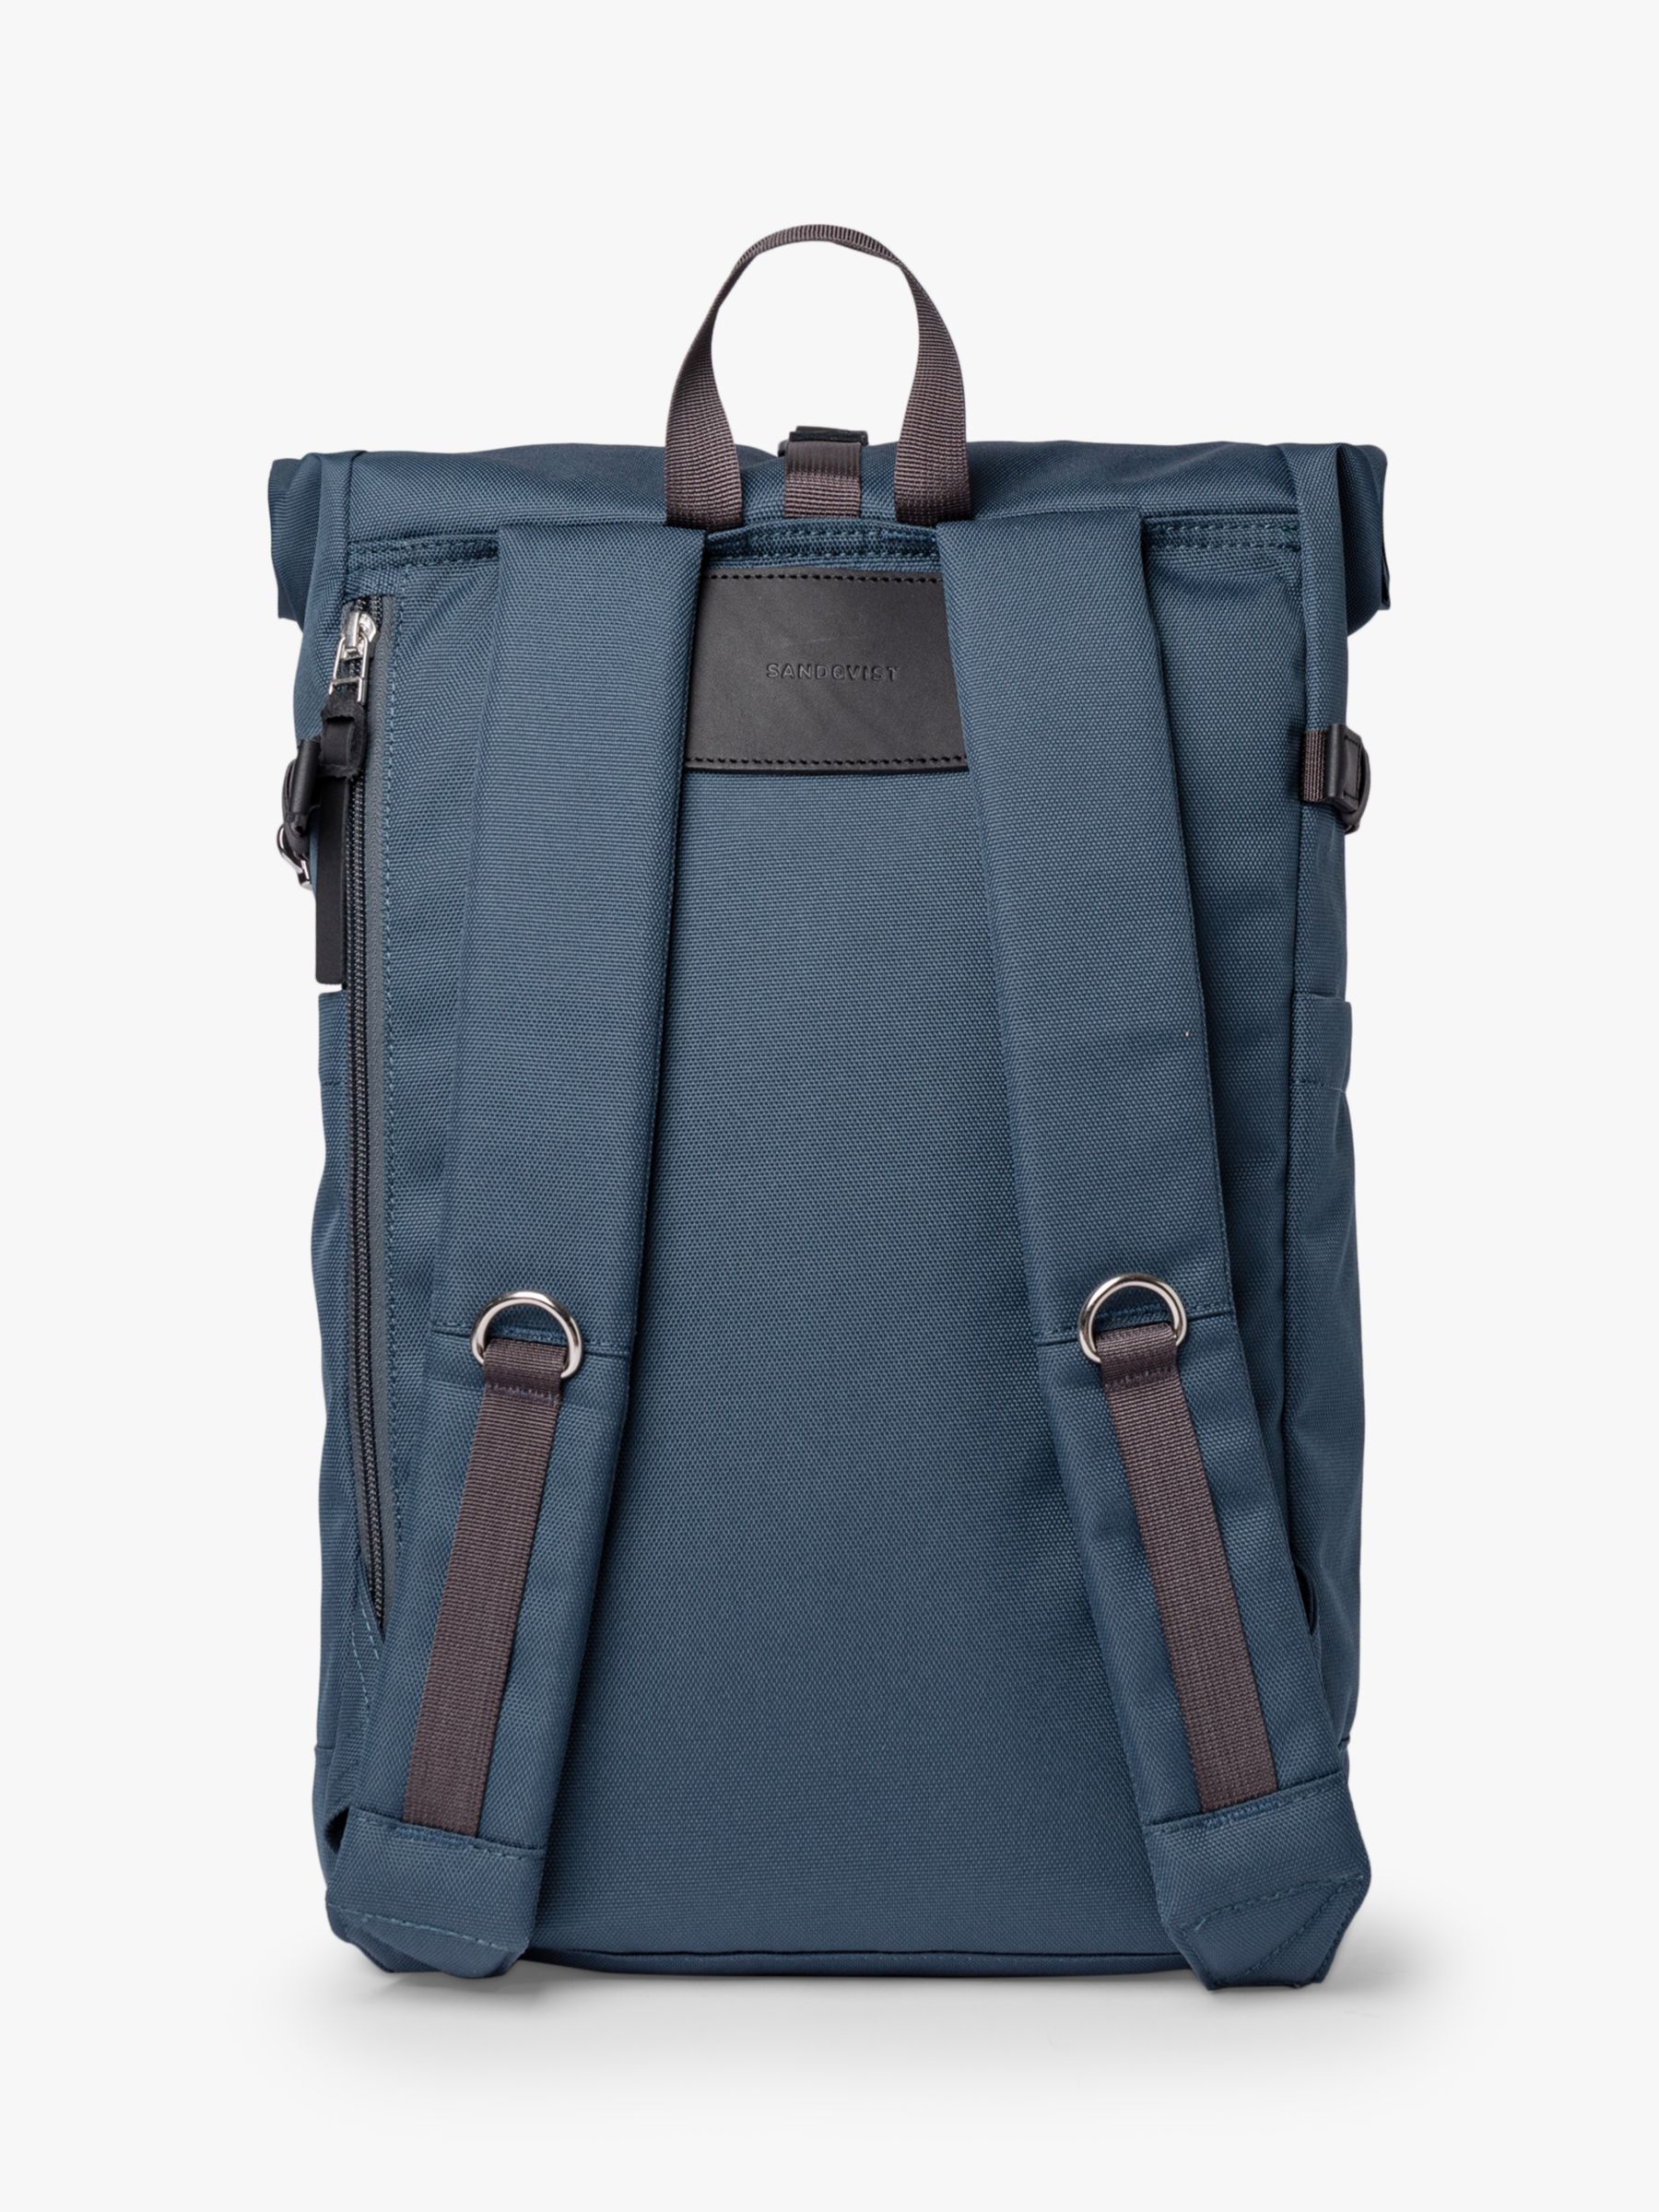 Sandqvist Ilon Rolltop Backpack, Steel Blue at John Lewis & Partners